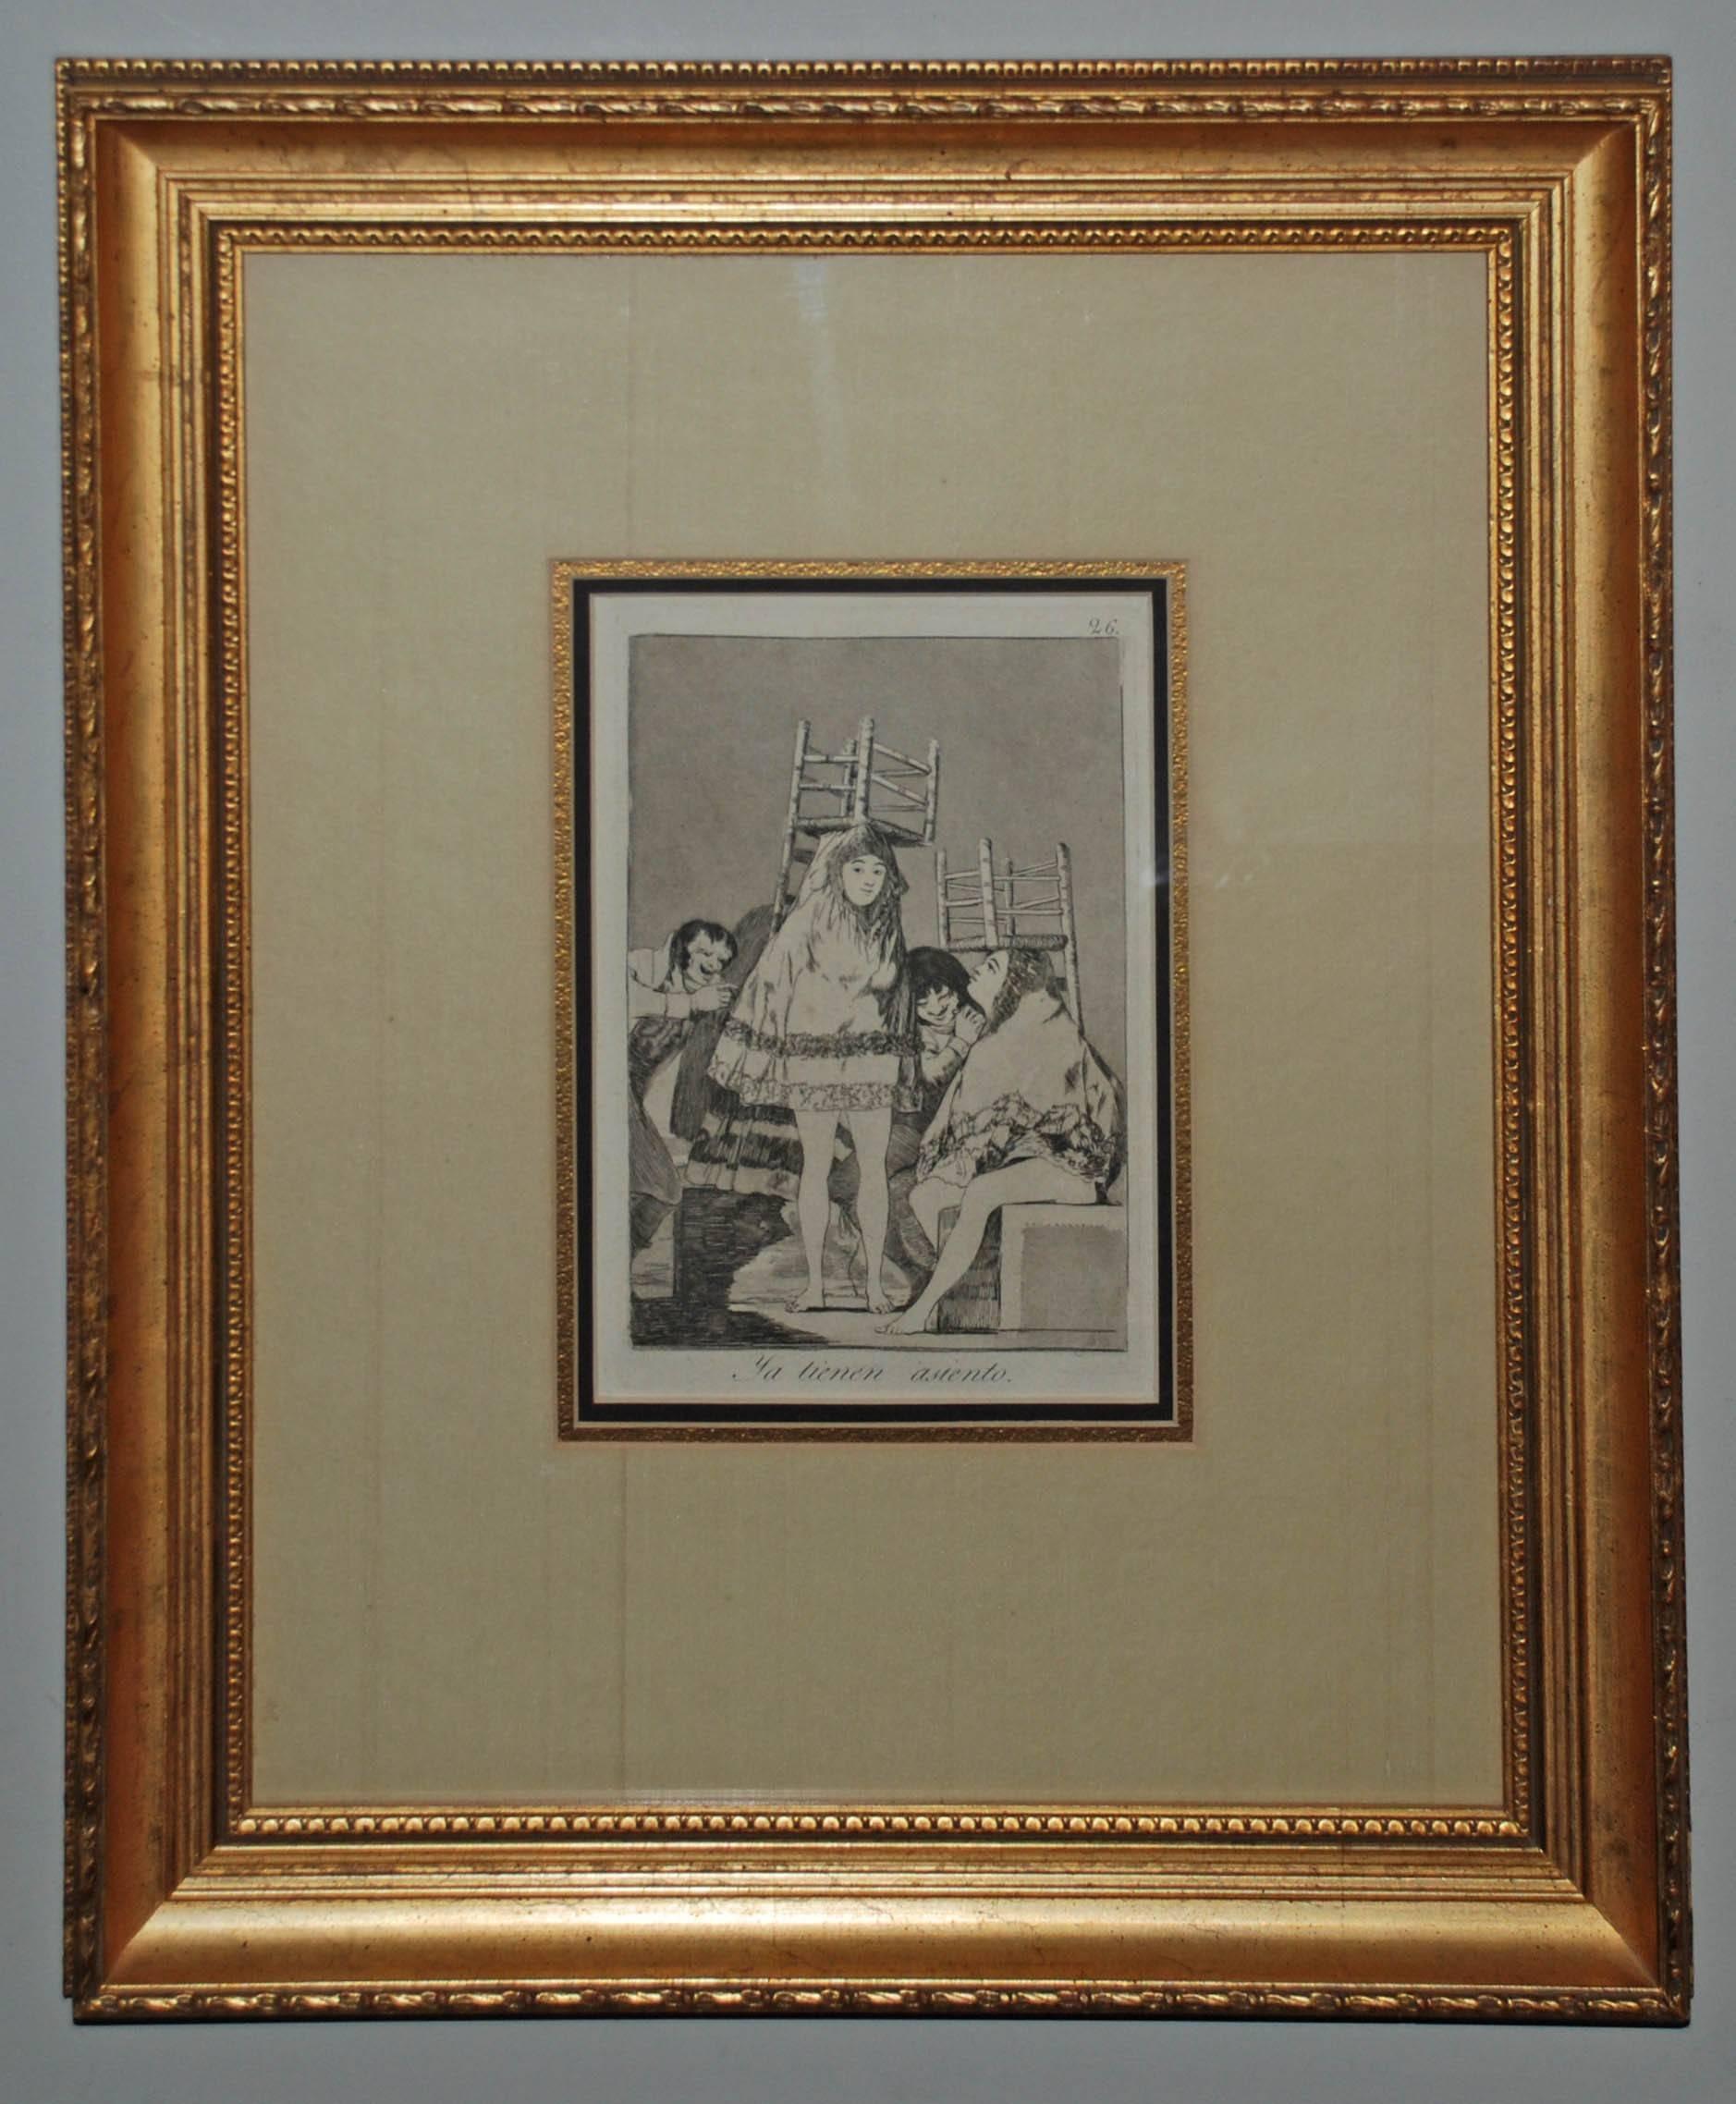 Ya Tienen Asiento (They've Already Got a Seat) - Print by Francisco Goya